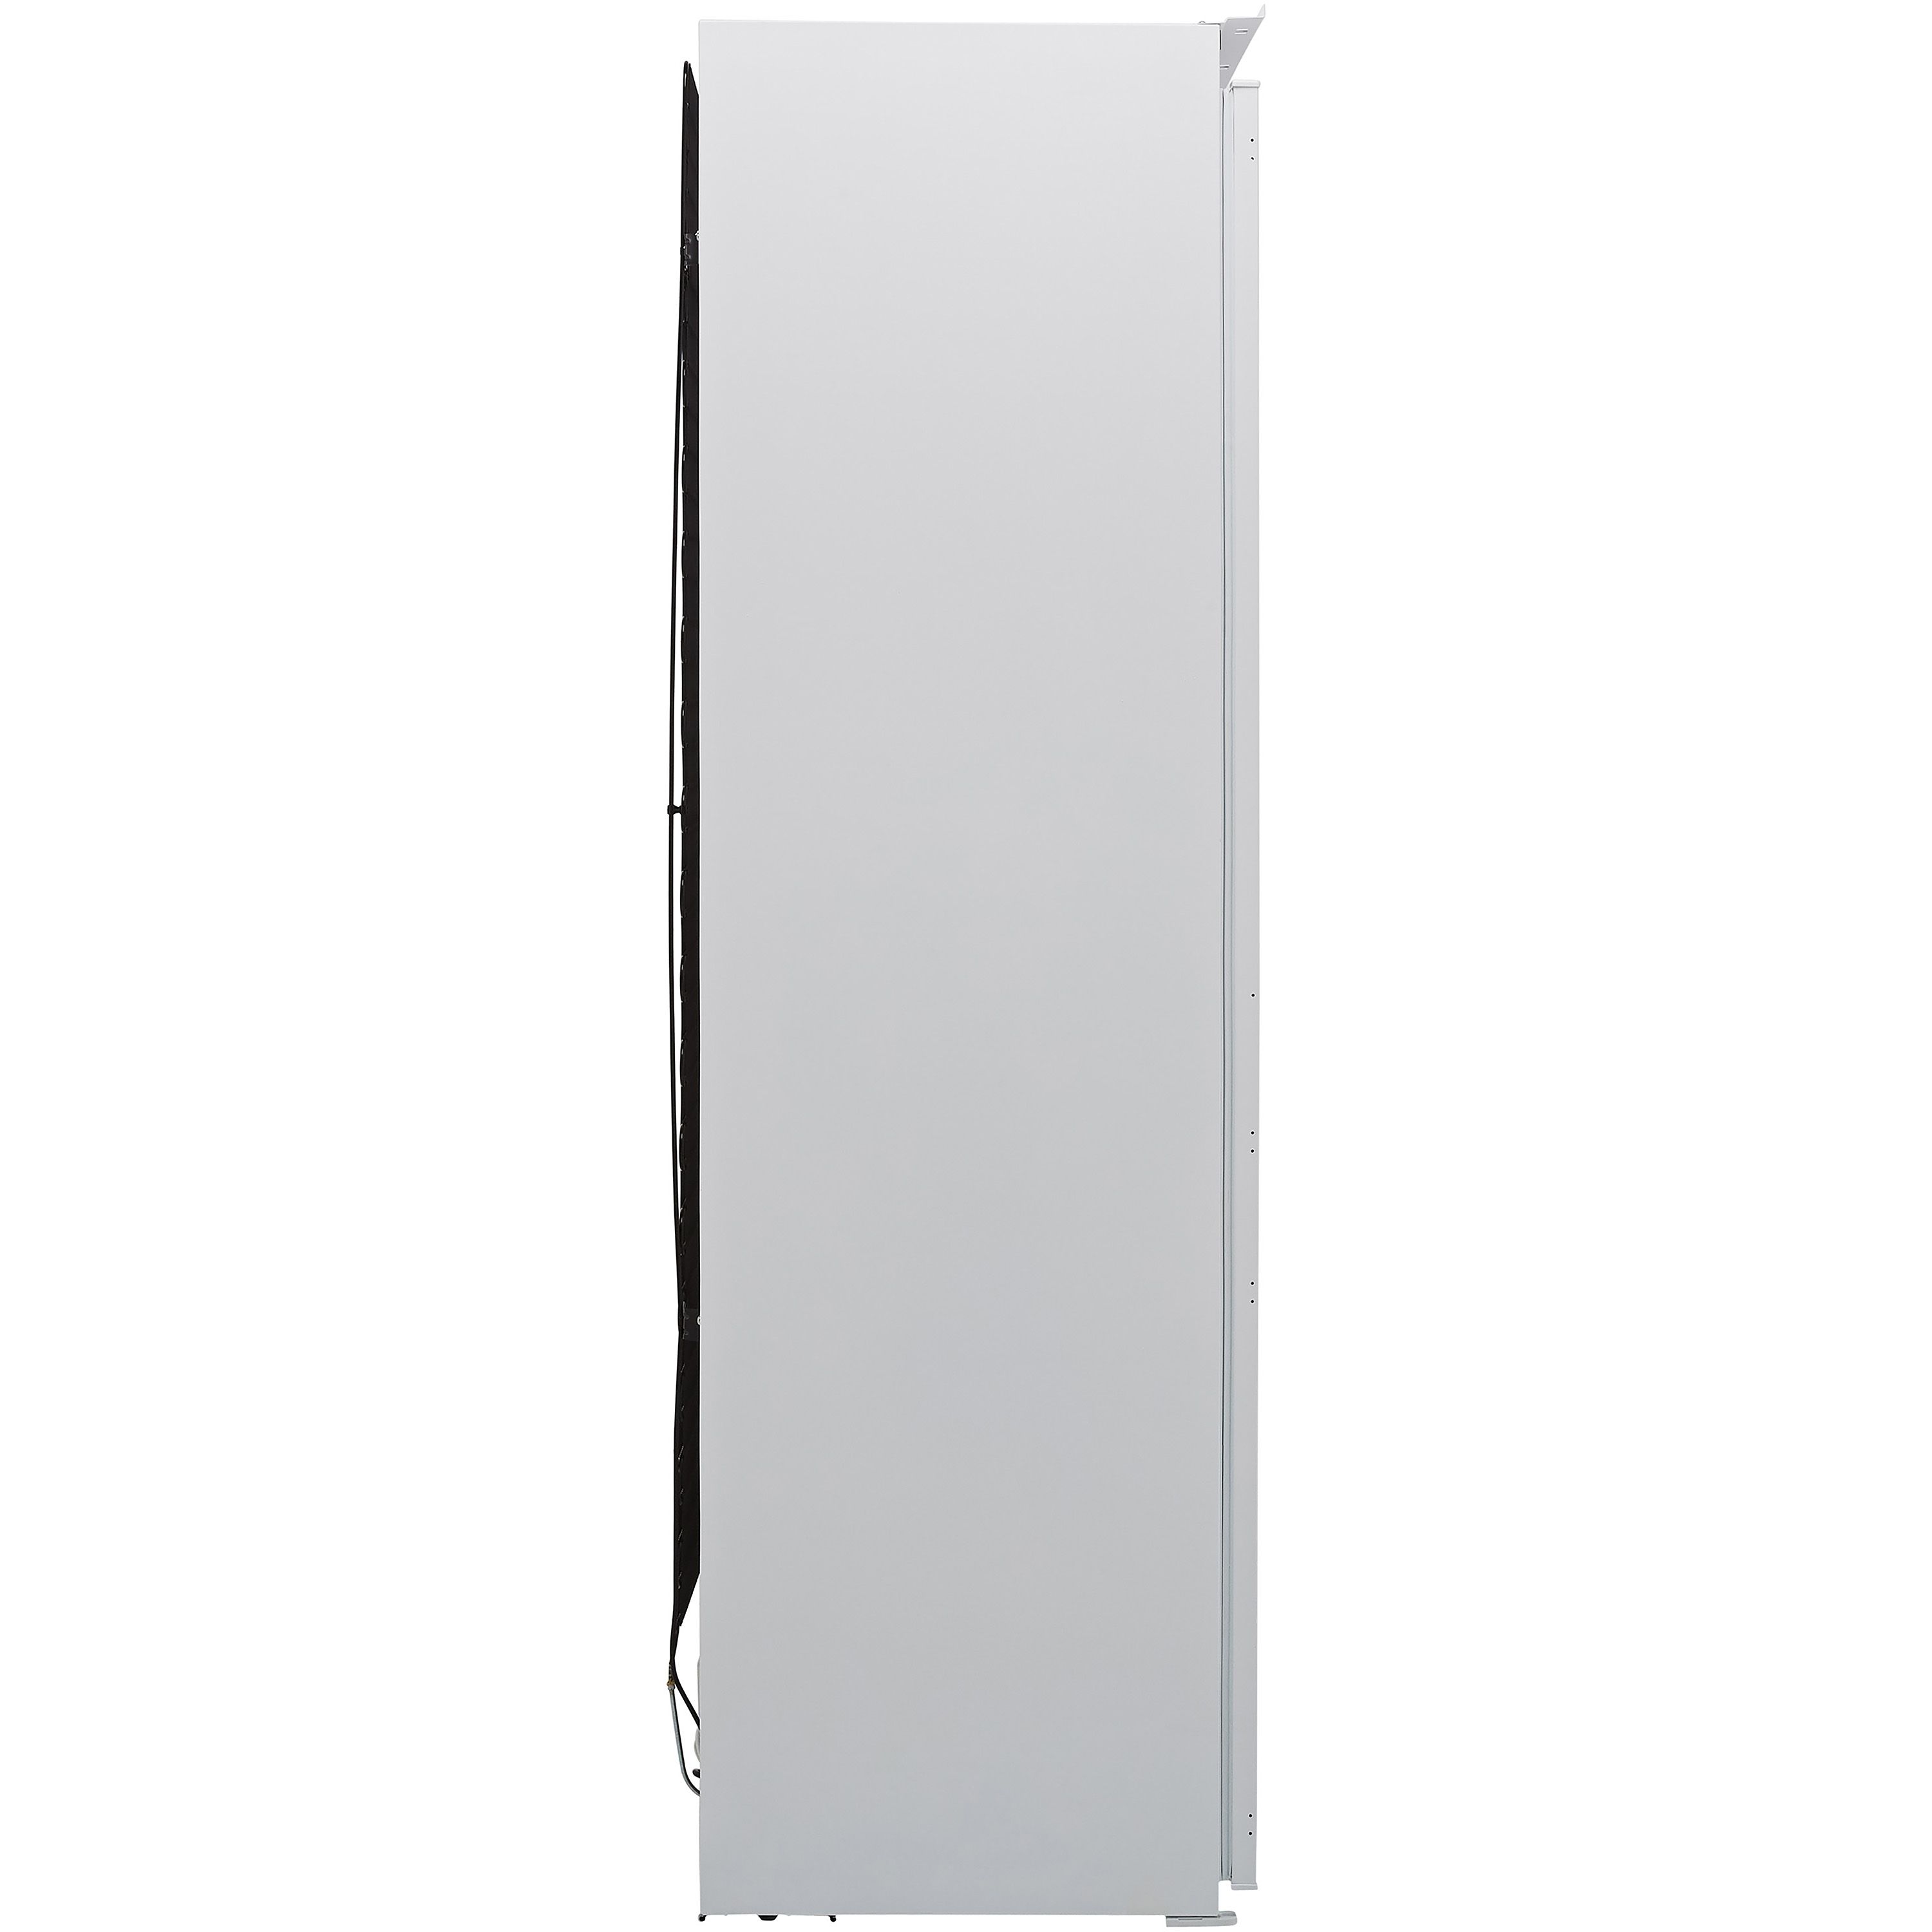 Hisense FIV276N4AW1 Integrated Manual defrost Freezer - Gloss white